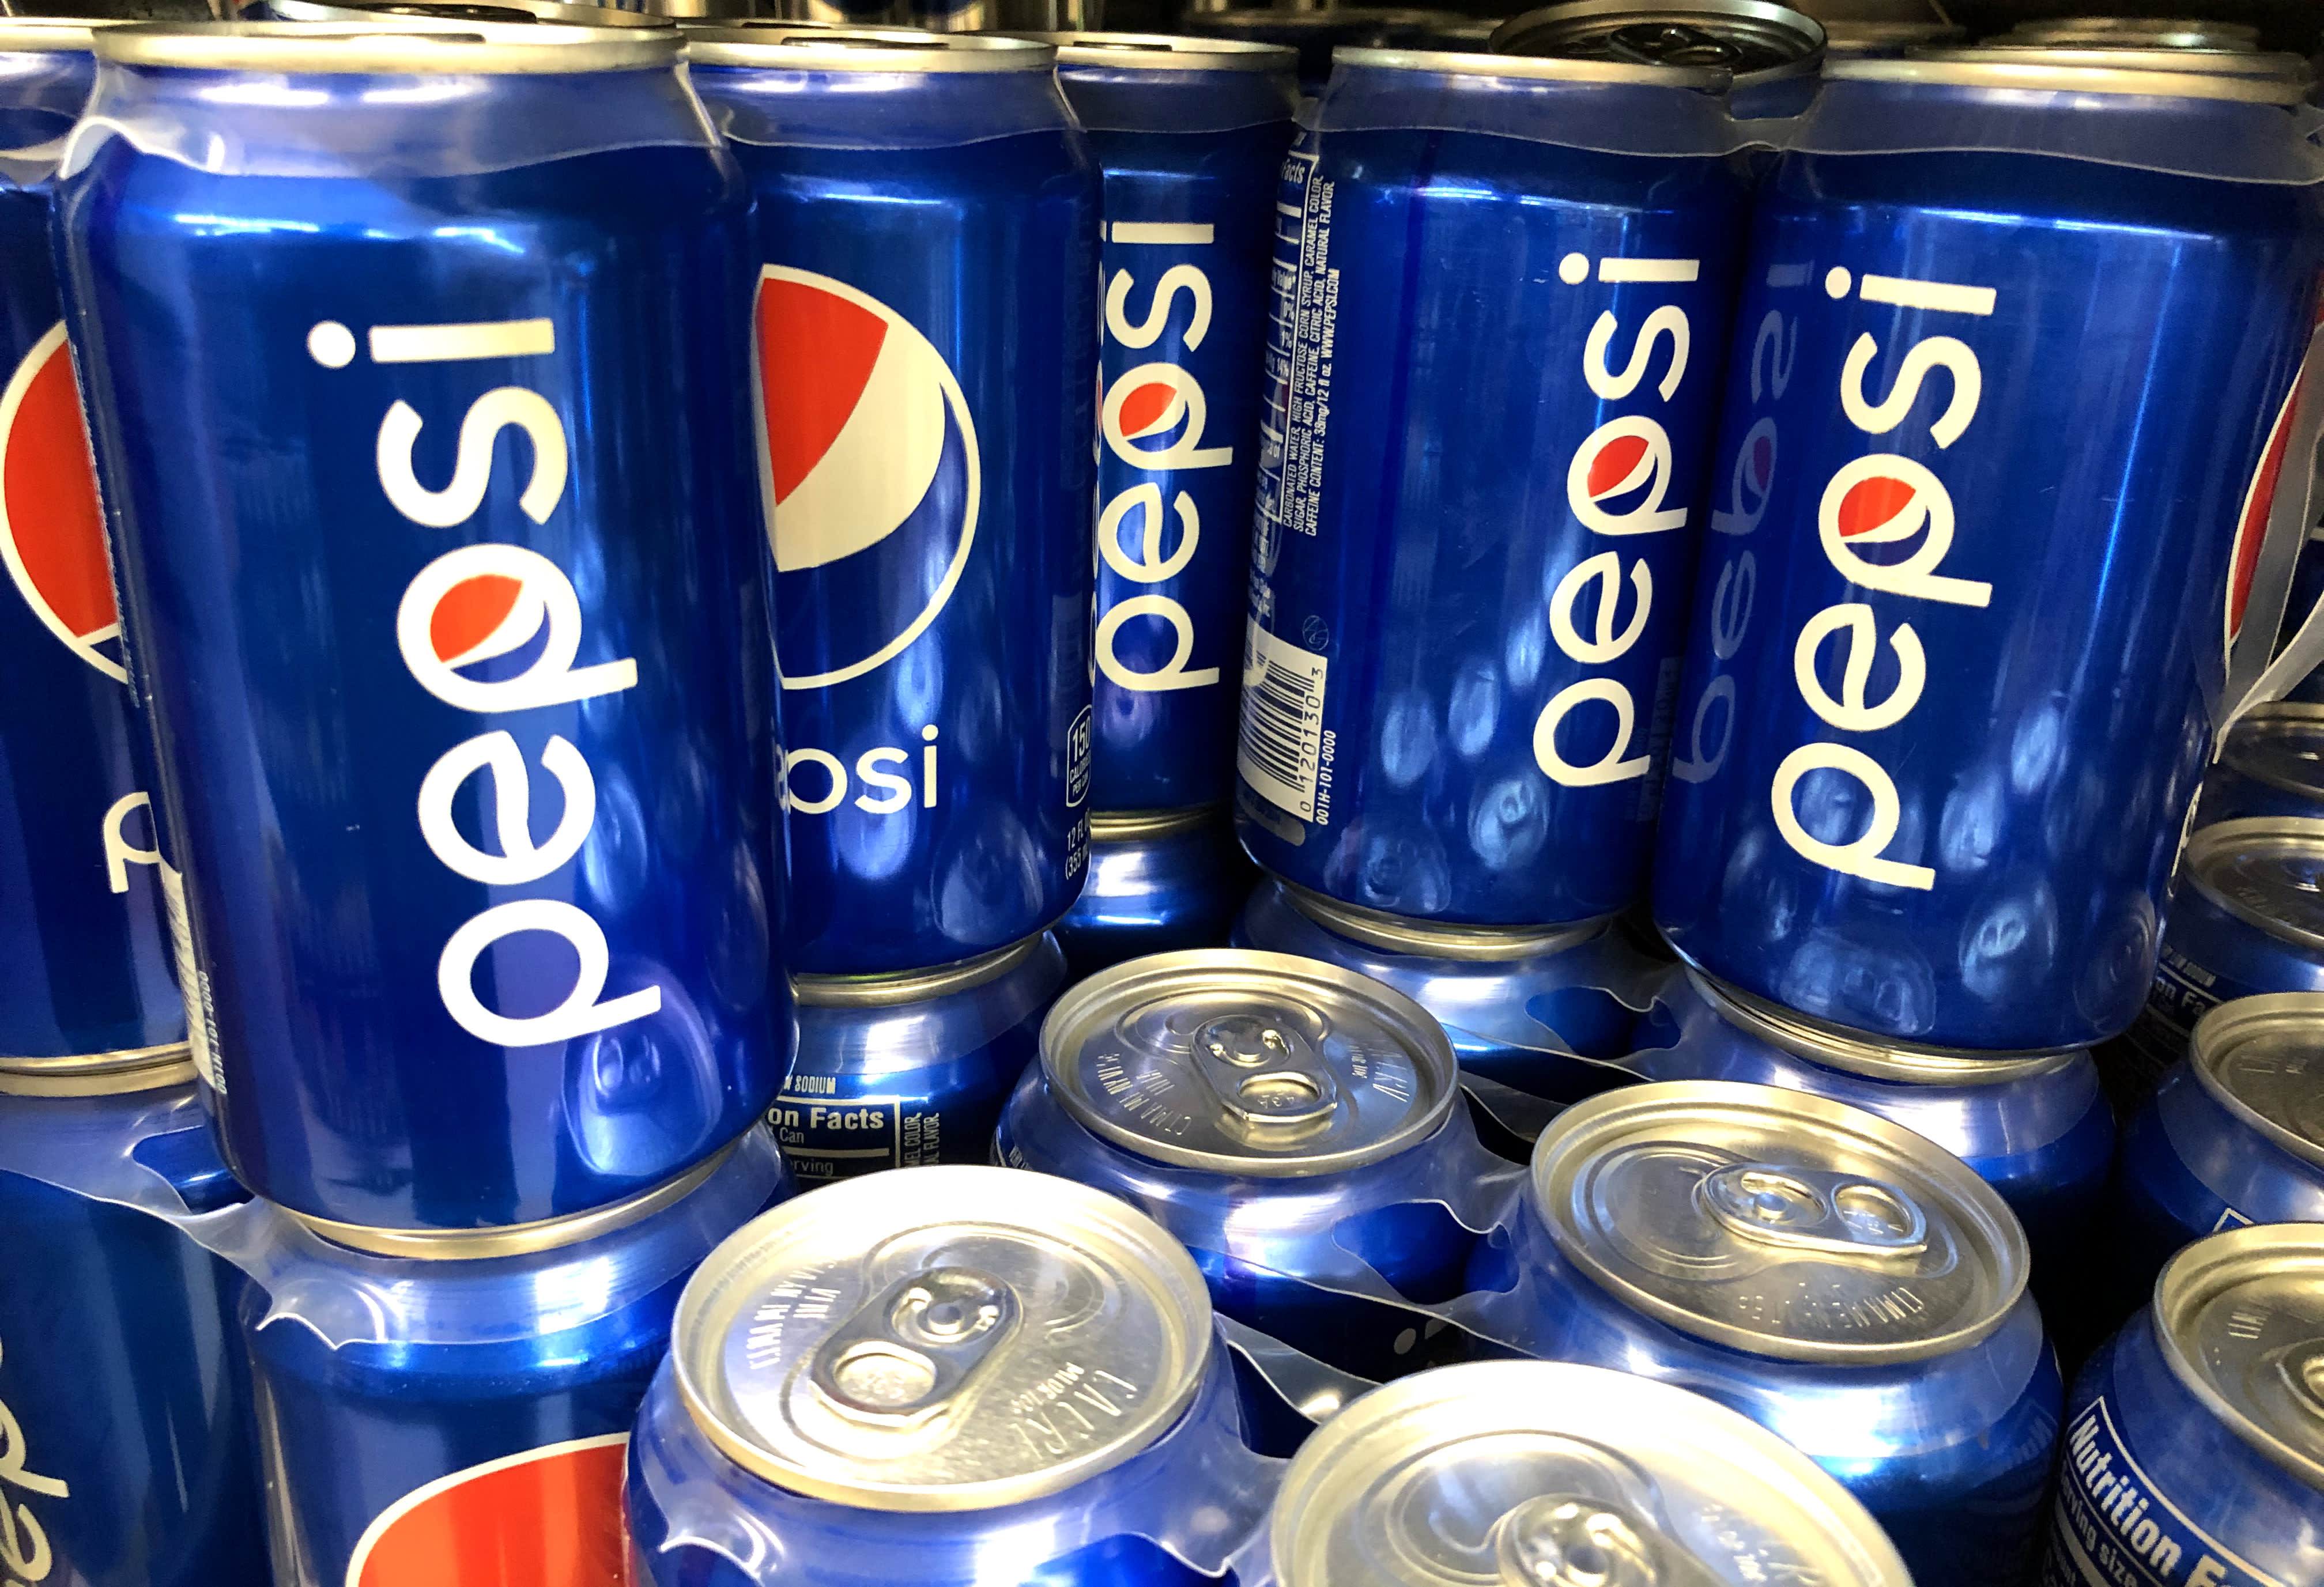 PepsiCo (PEP) Q4 2020 earnings beat